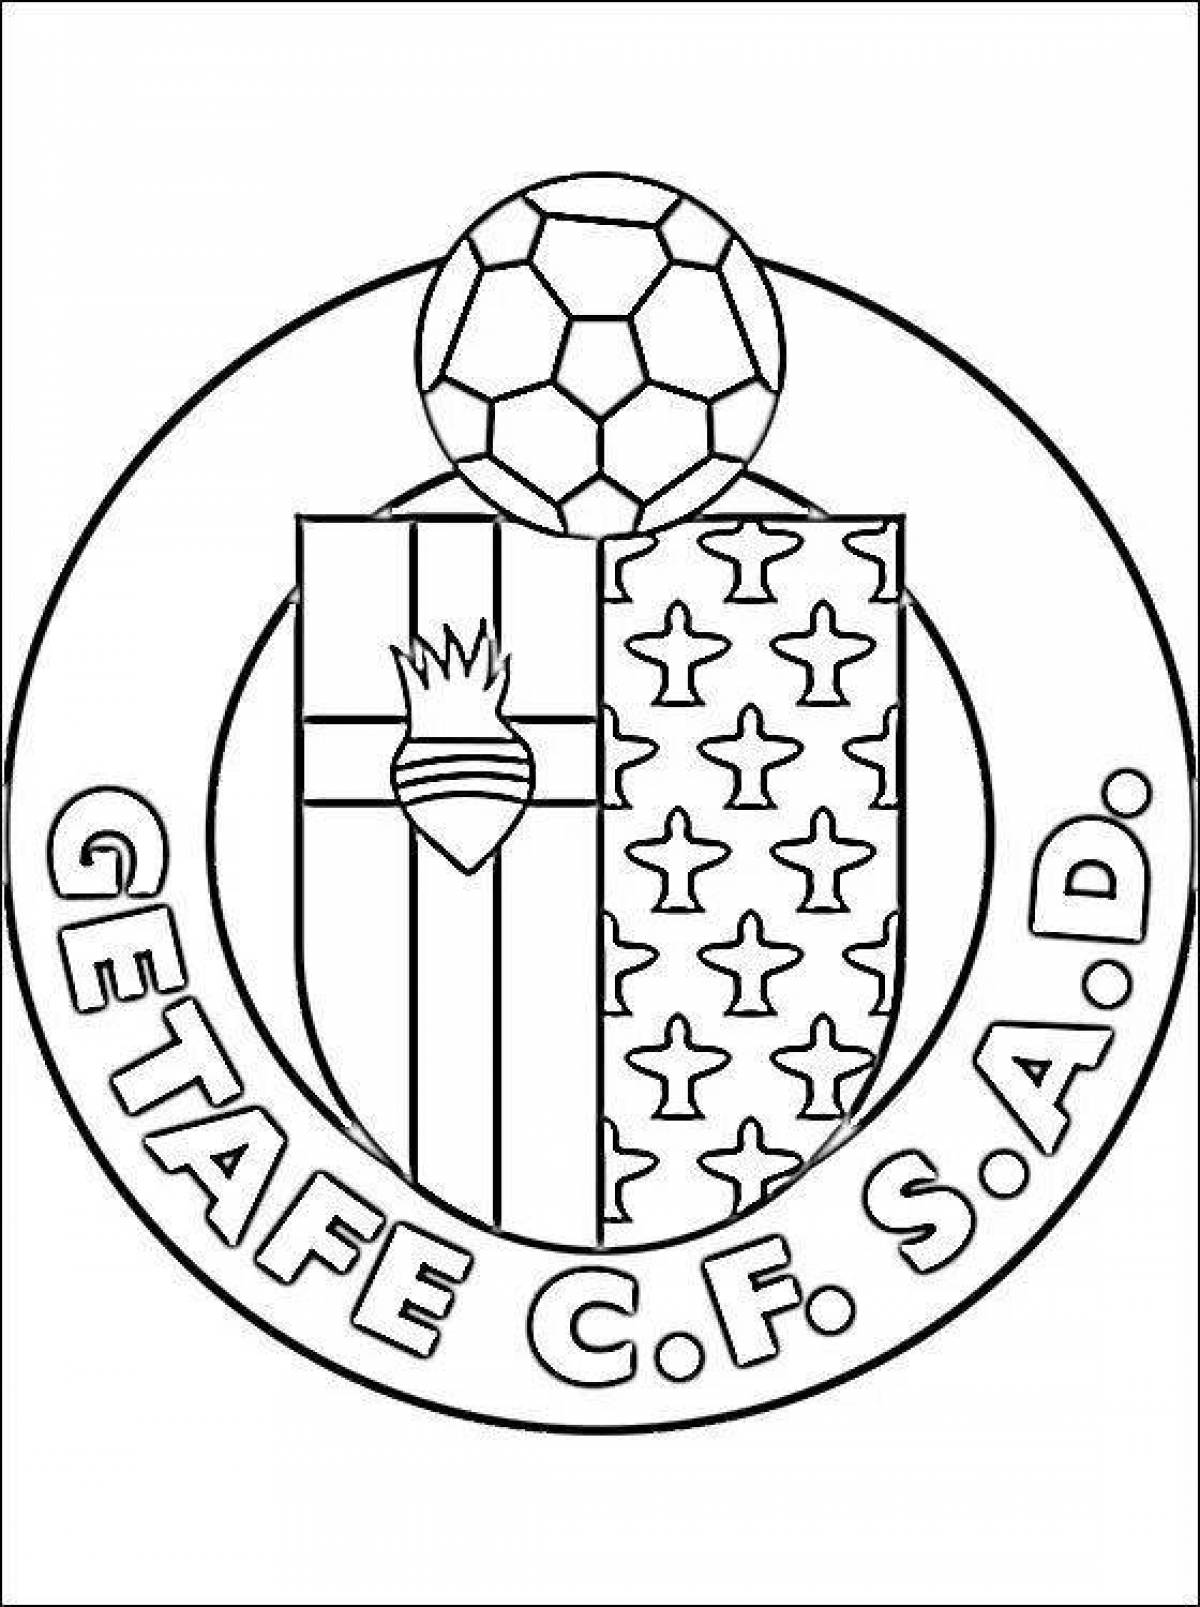 Football club emblems #12